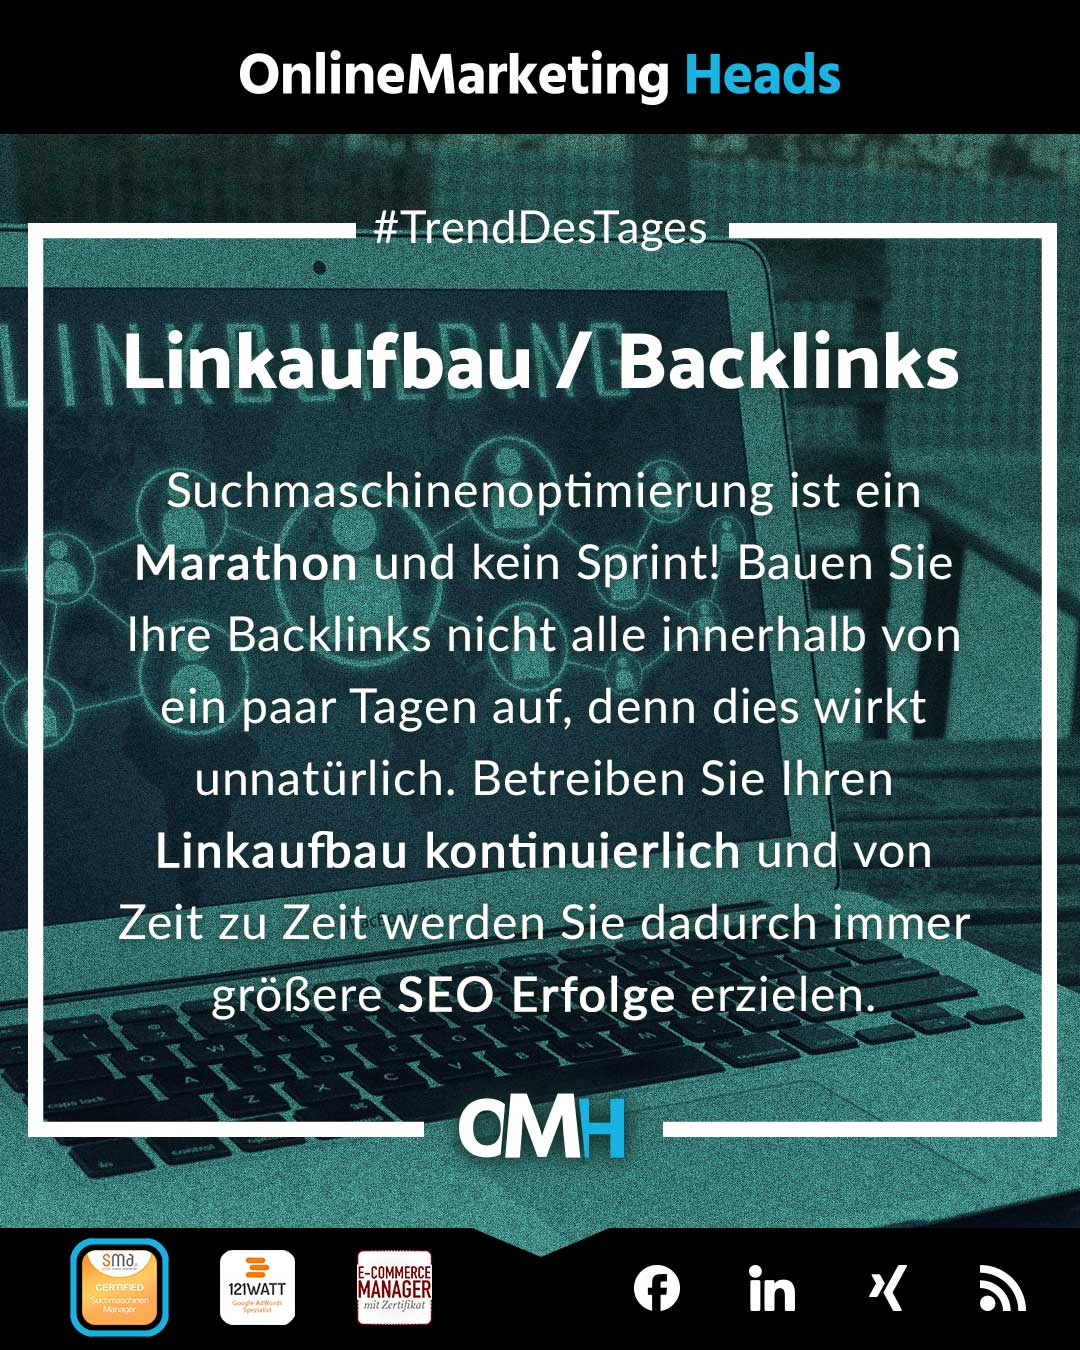 Backlinks Linkaufbau SEO Trend 2021 OnlineMarketing Heads